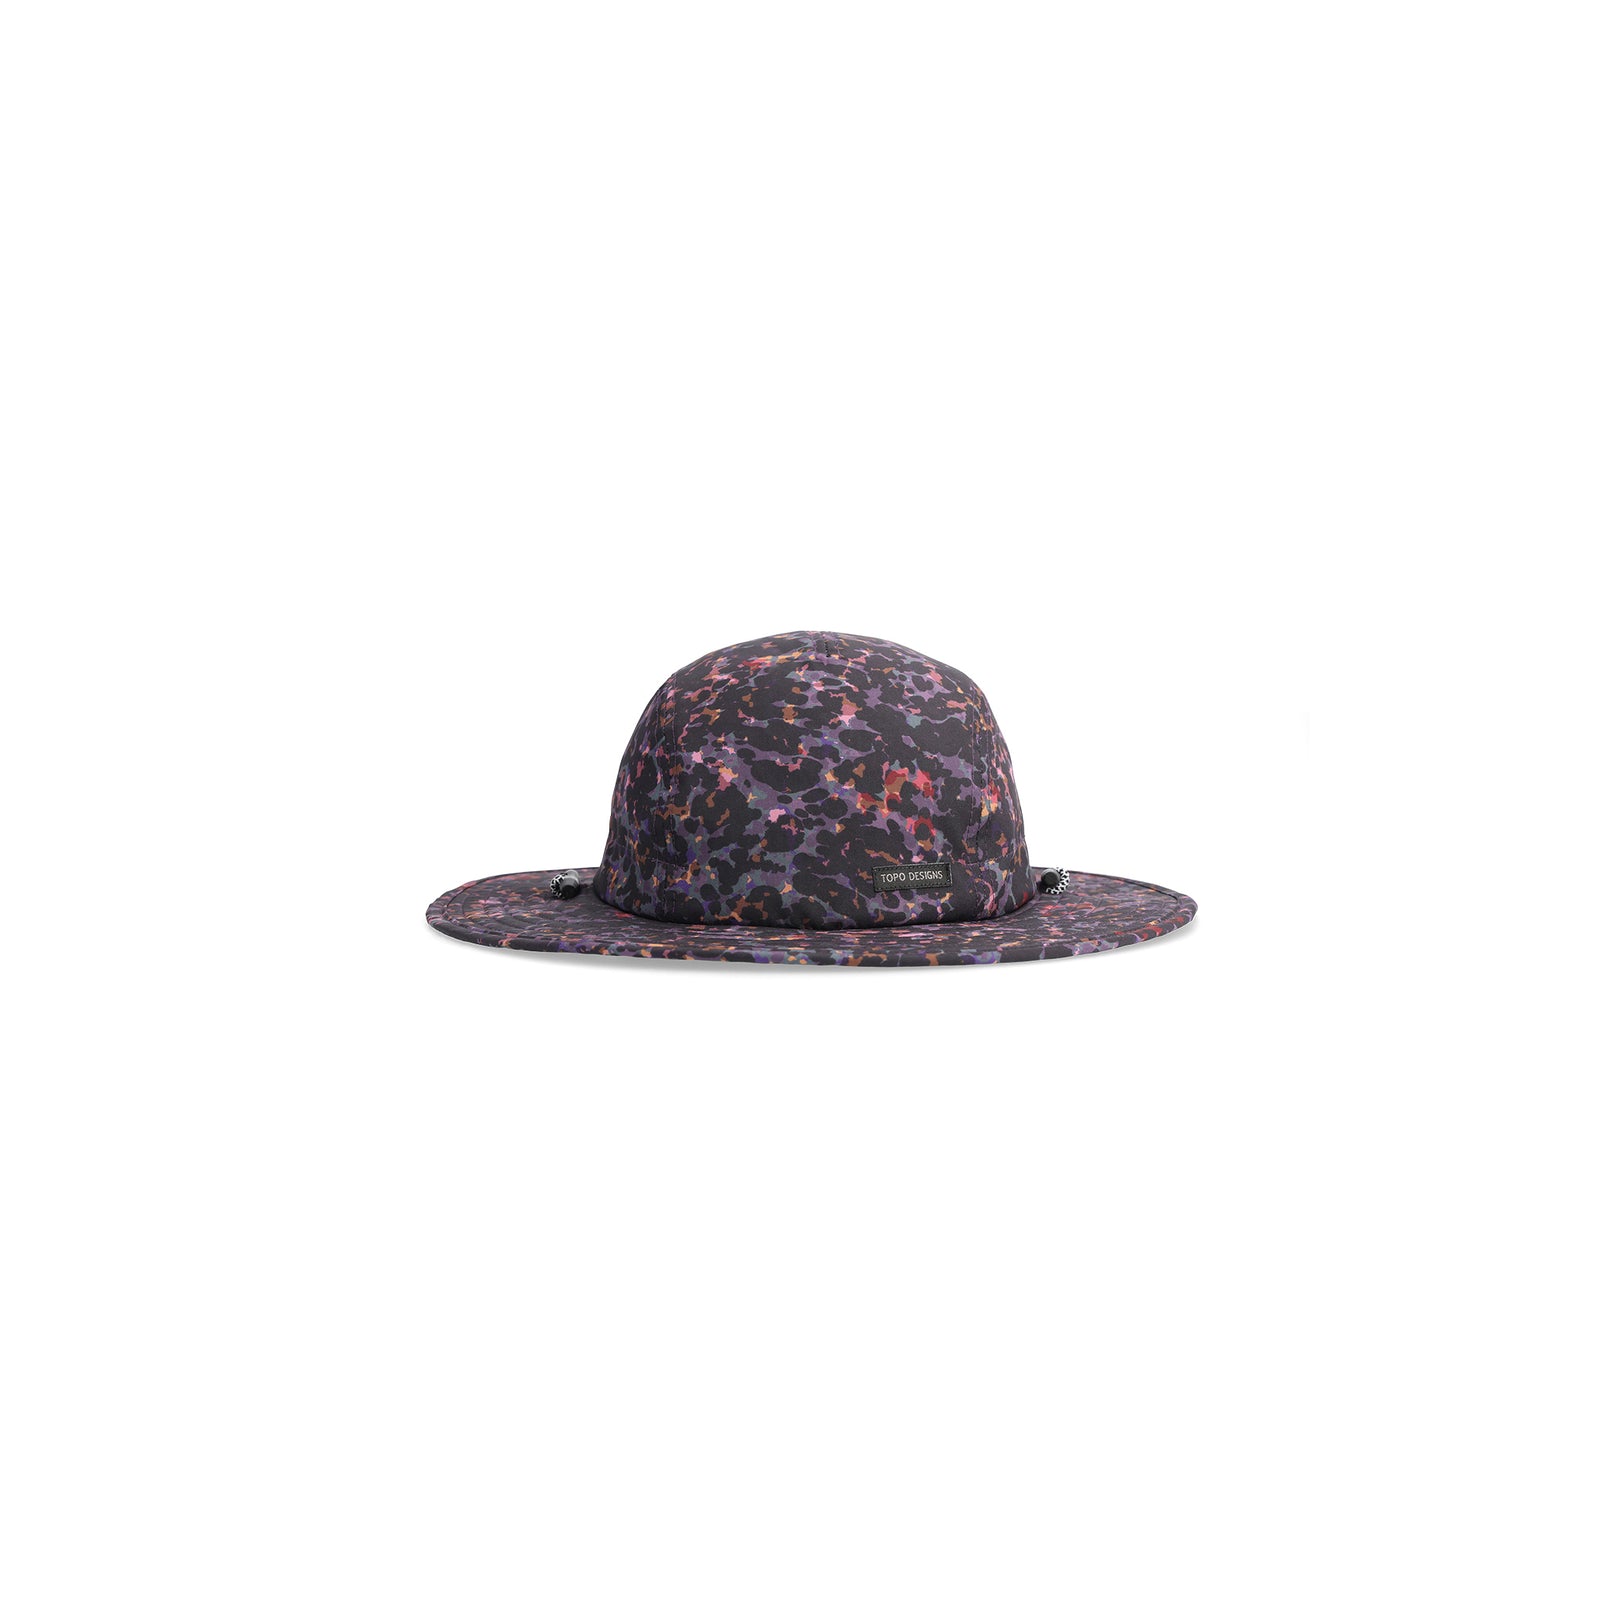 Front View of Topo Designs Sun Hat in "Black Meteor"